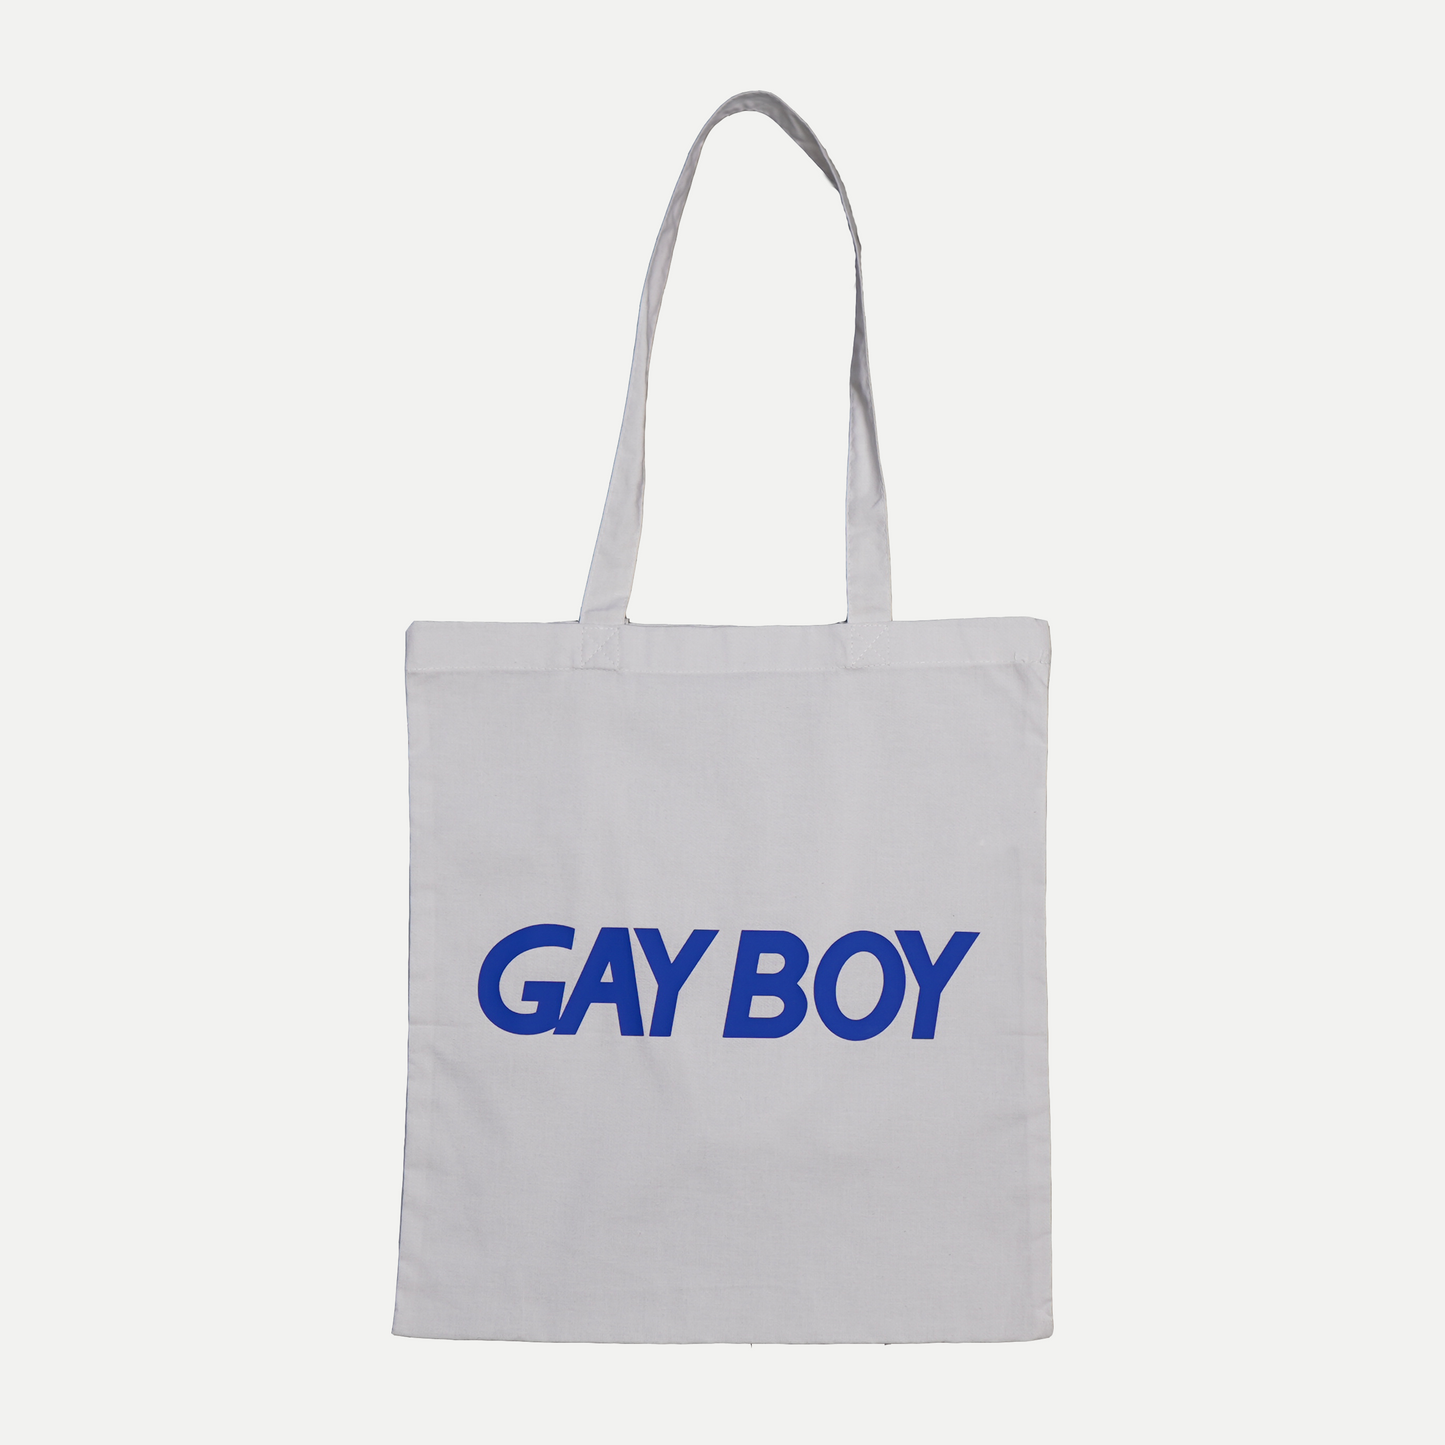 Auduma maisiņš baltyā krāsā ar "GAYBOY" apdruku.